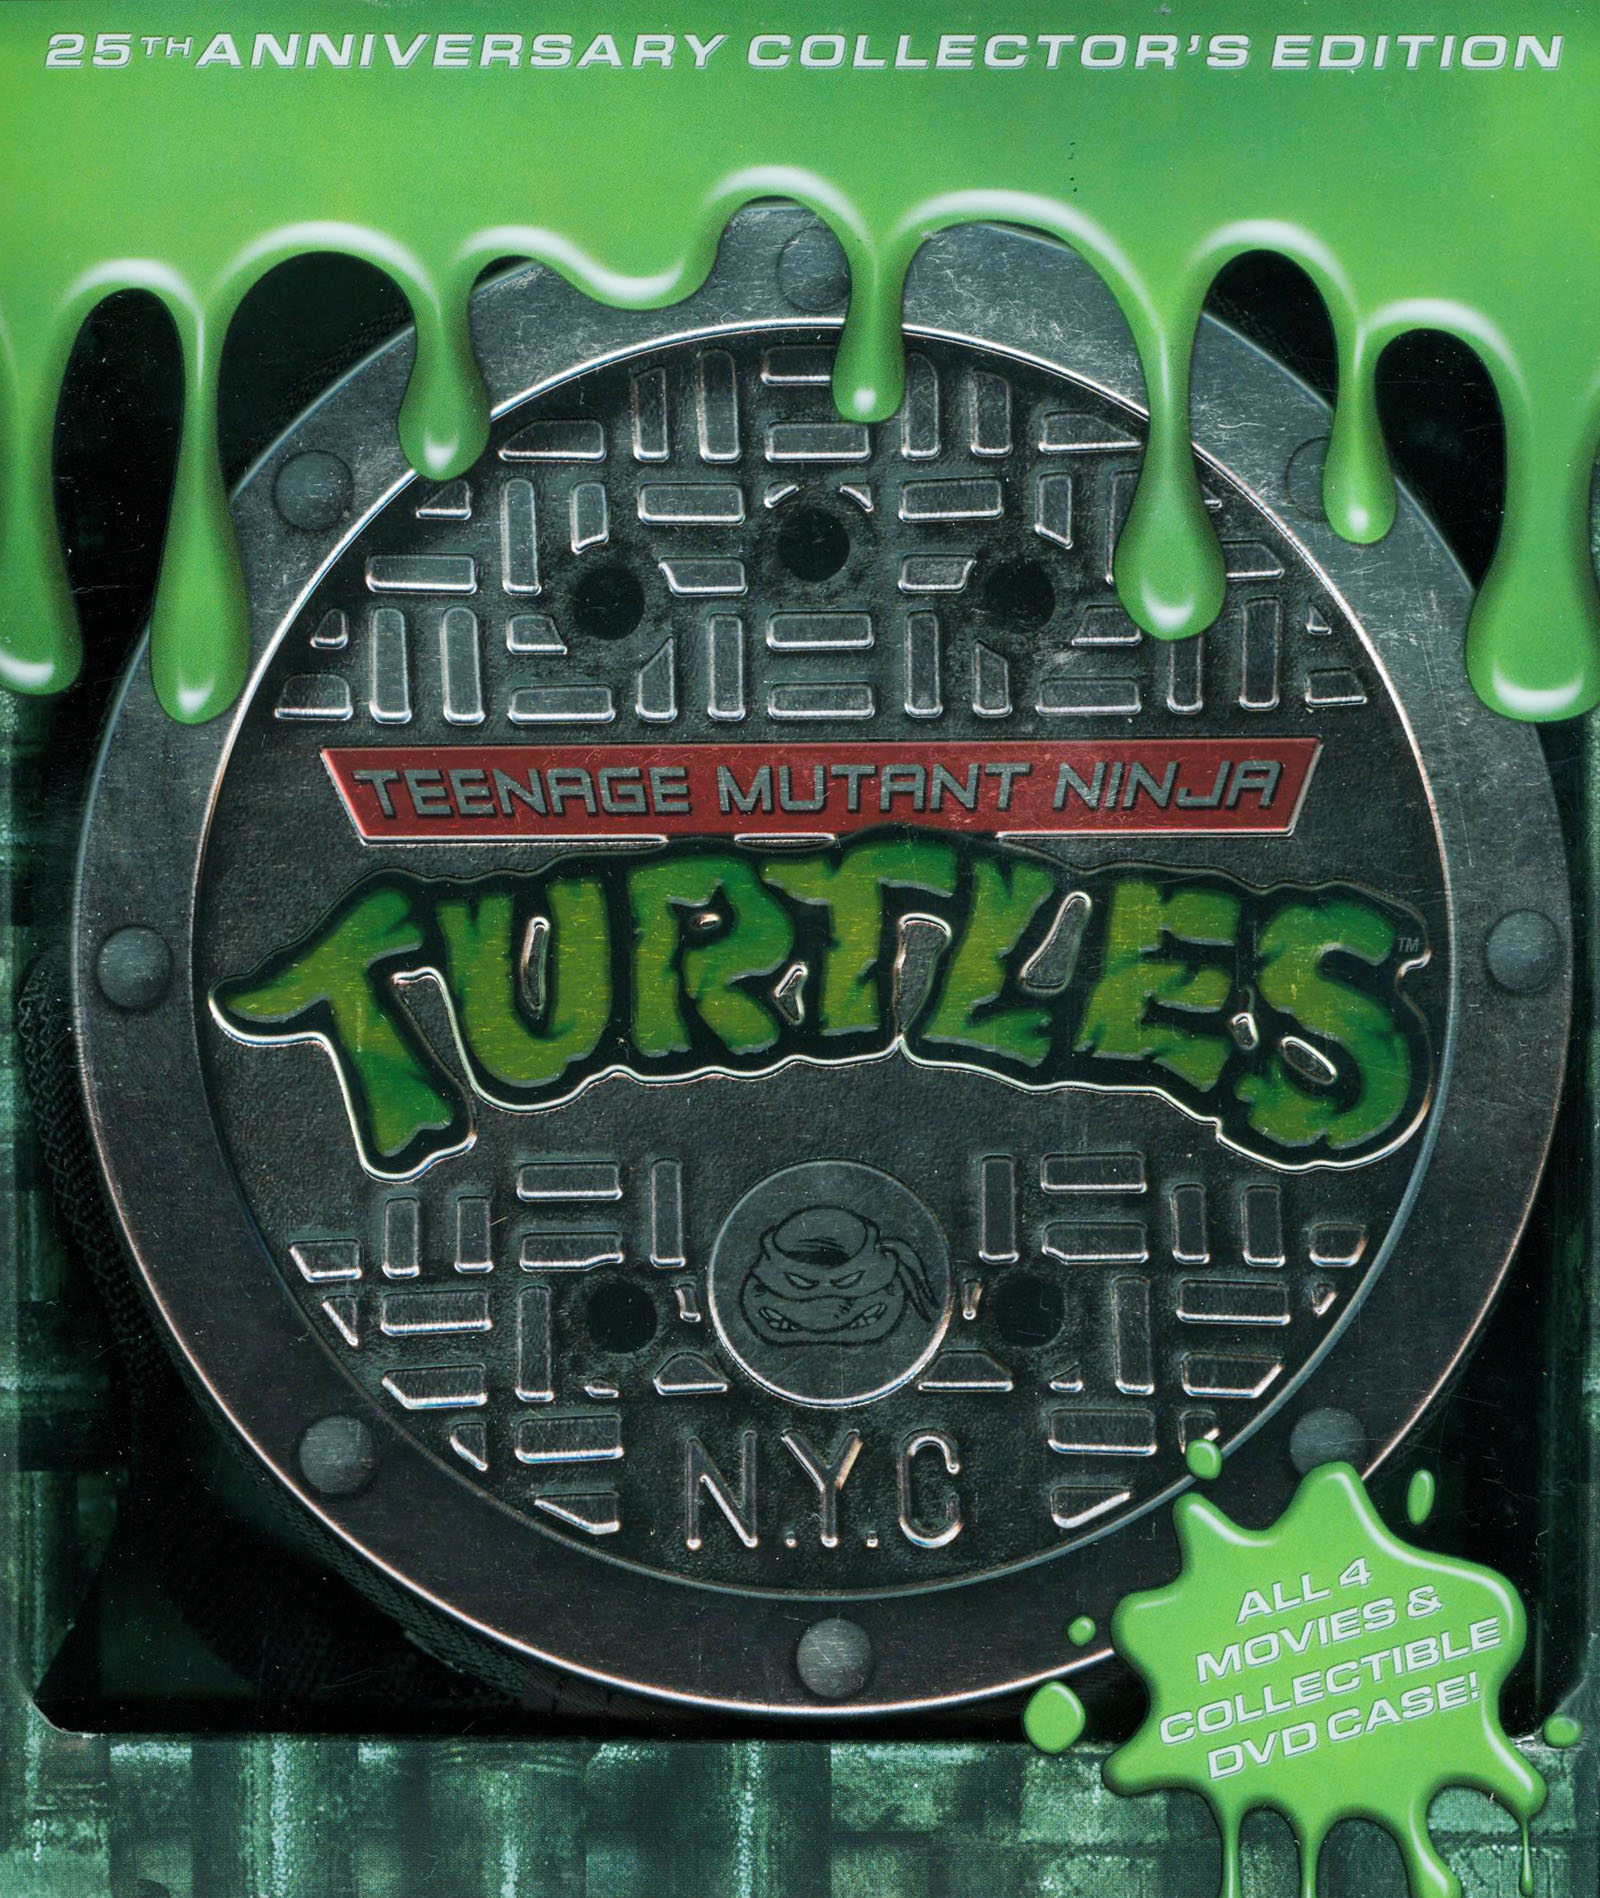 Teenage Mutant Ninja Turtles Blu-ray (25th Anniversary Collector's